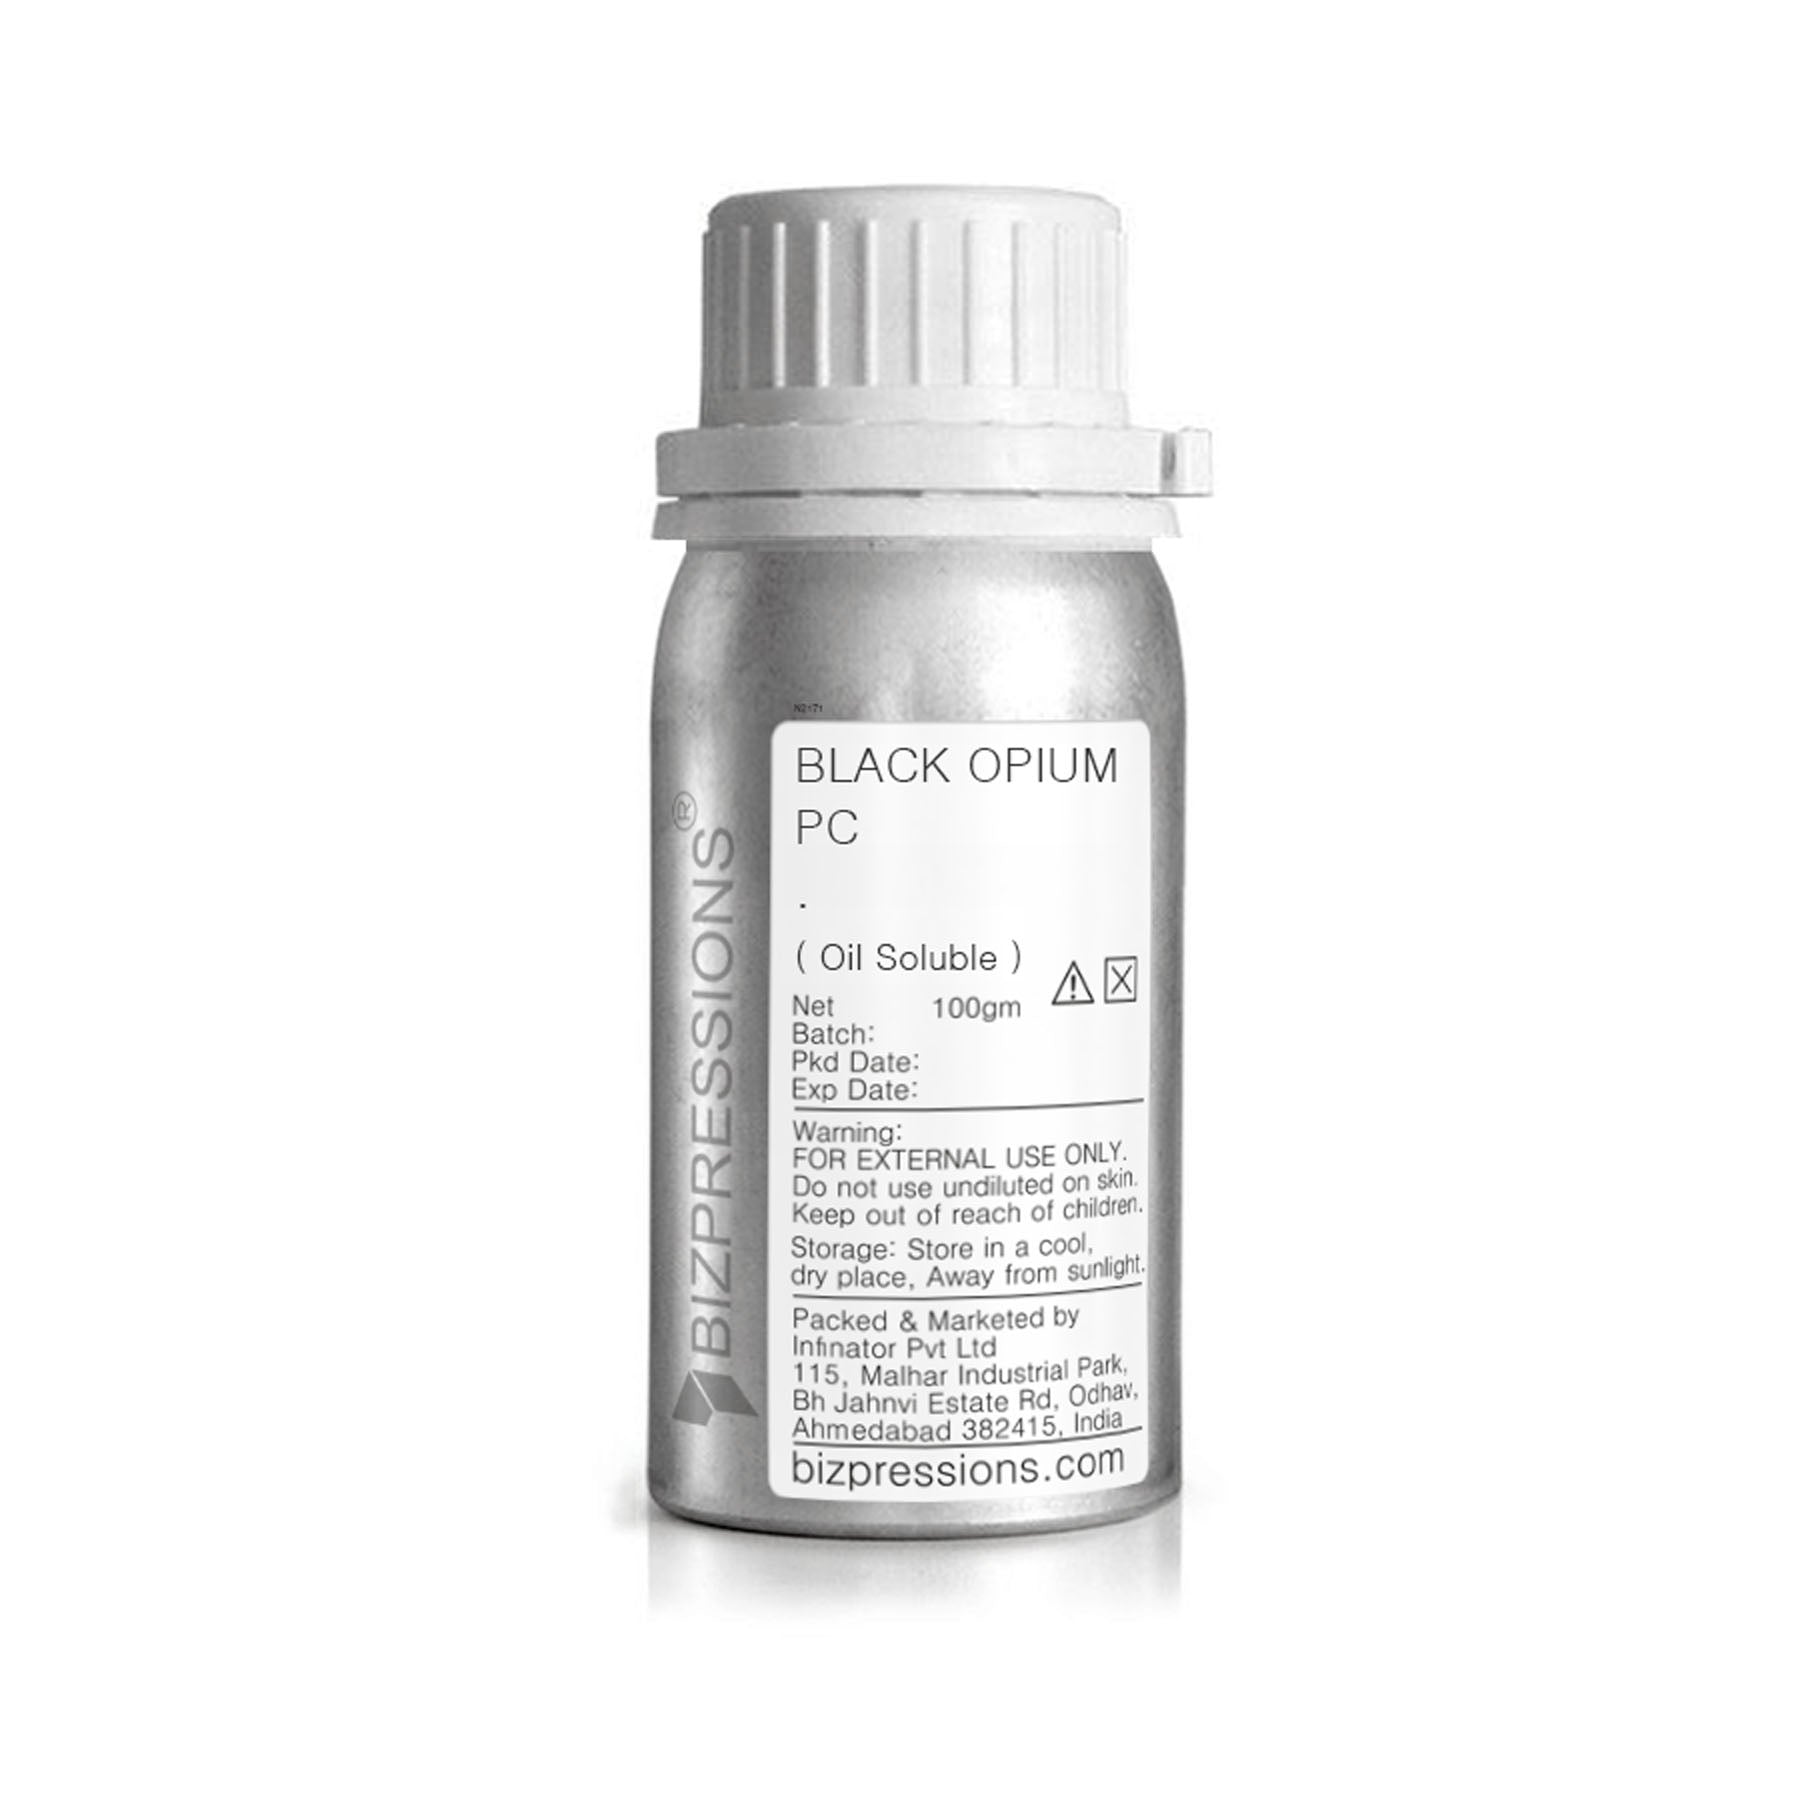 BLACK OPIUM PC - Fragrance ( Oil Soluble ) - 100 gm